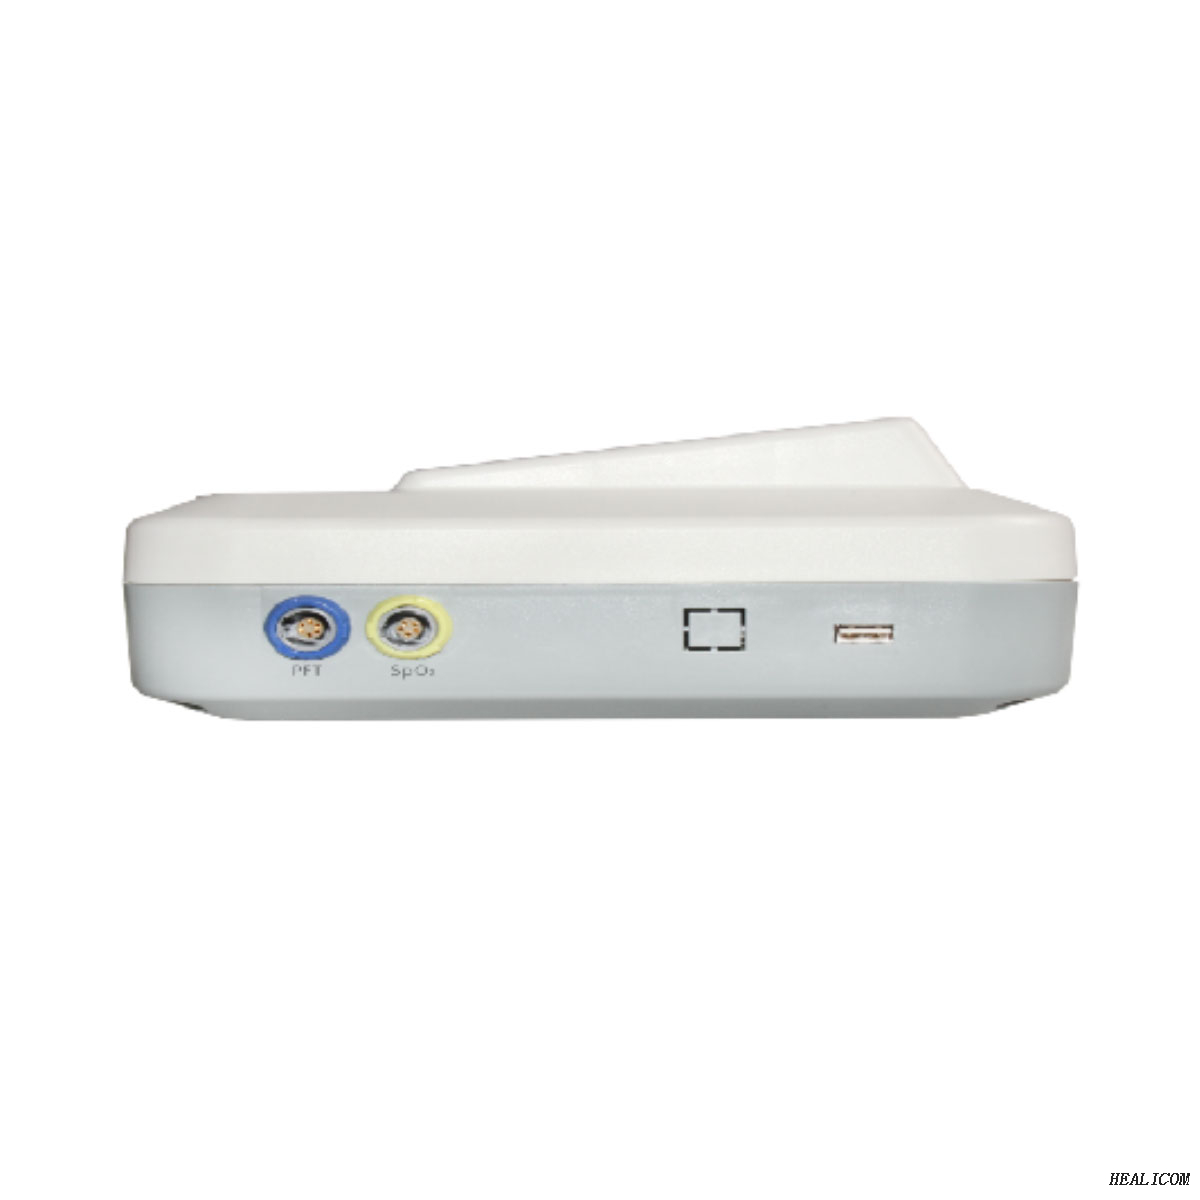 High Quality HSP100 handheld portable medical bluetooth spirometer for hospital or home